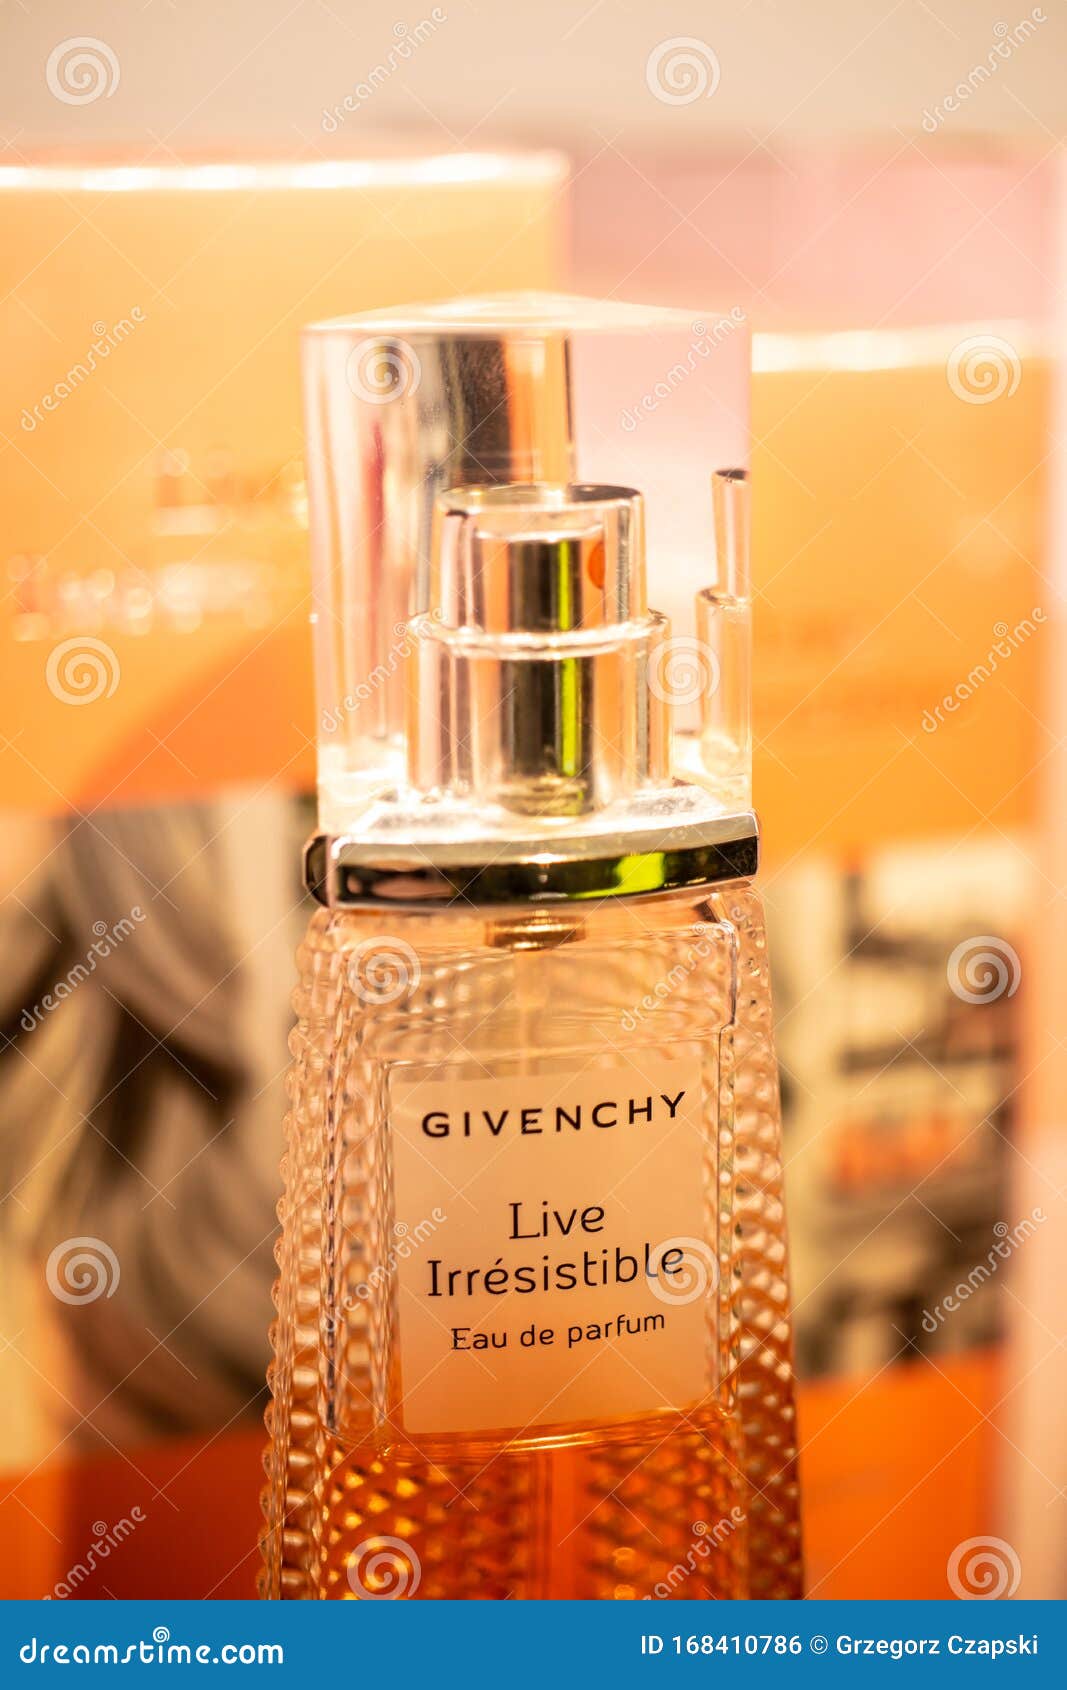 givenchy perfume shop